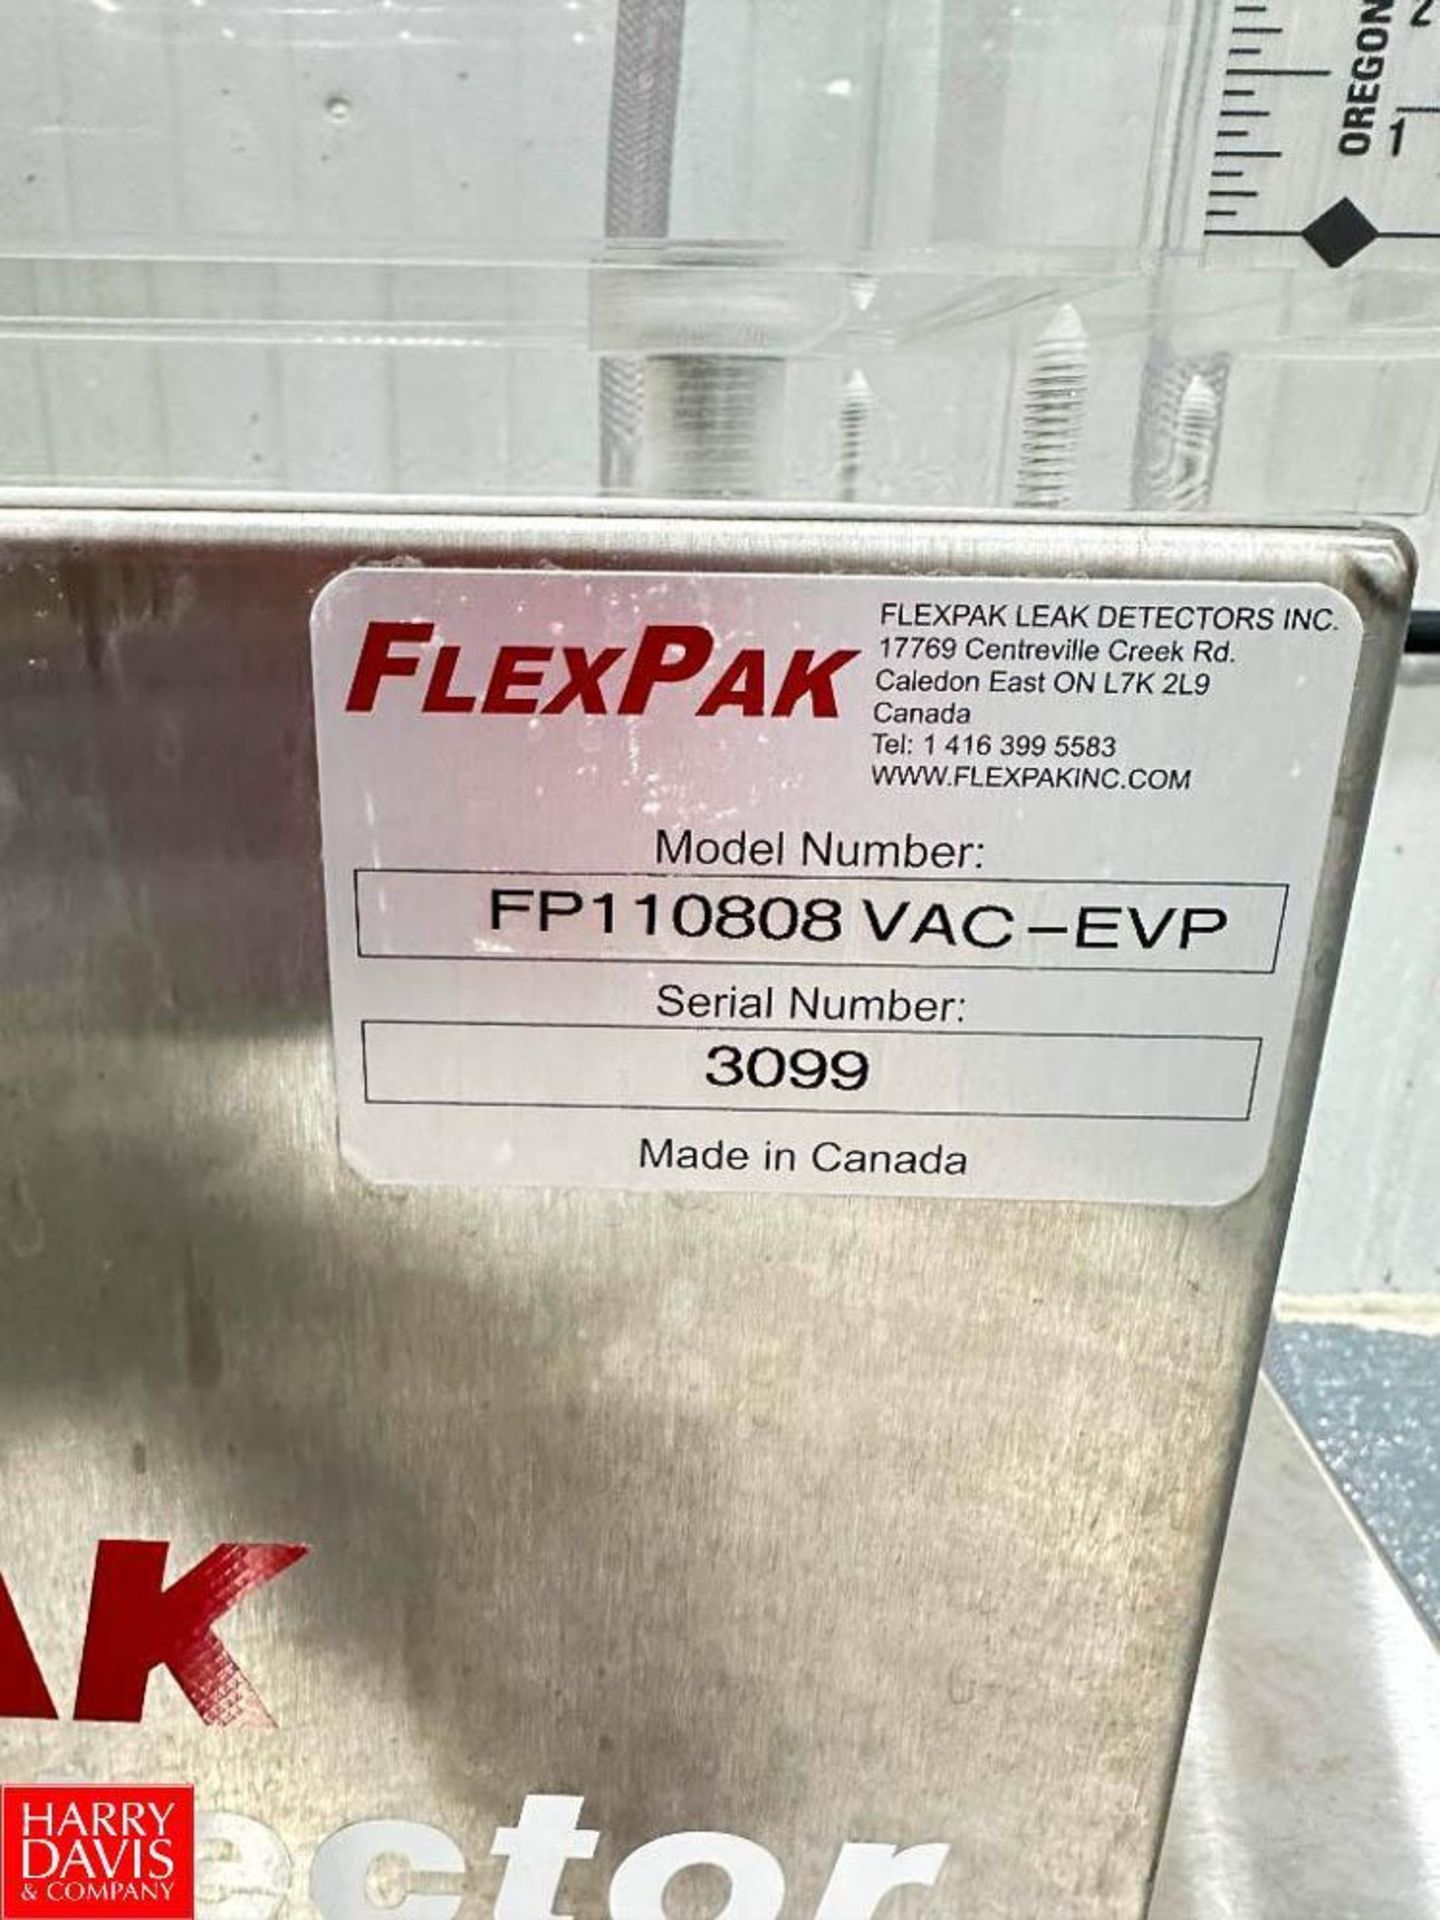 Flexpak Leak Detector, Model: FP110808 VAC-EVP, S/N: 3099 (Subject to BULK BID) - Rigging Fee: $150 - Image 2 of 2